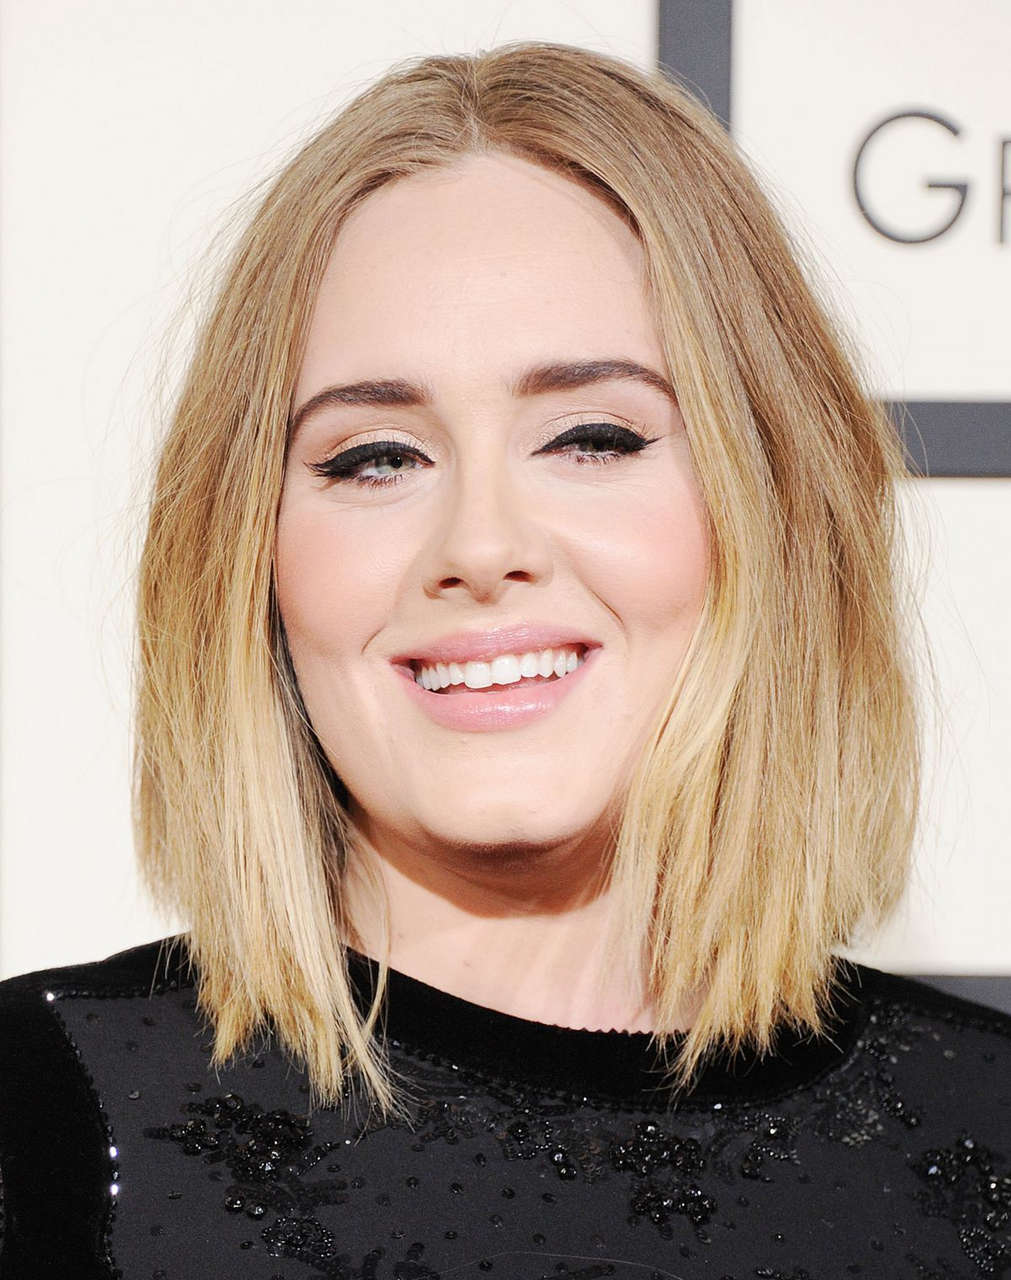 Adele Grammy Awards 2016 Los Angeles